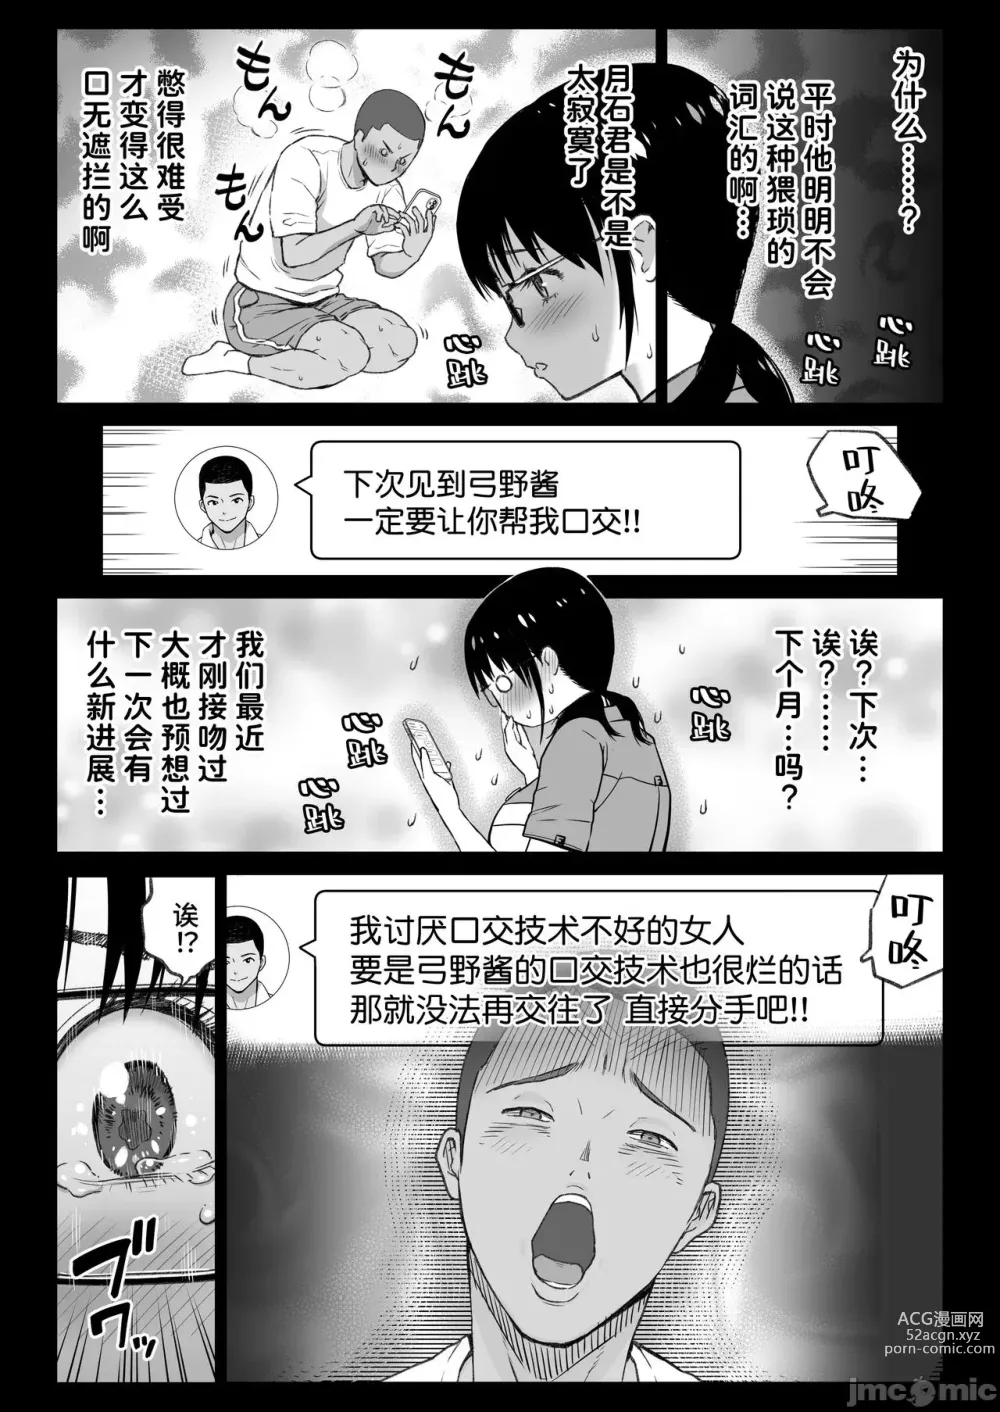 Page 11 of doujinshi 彼氏持ち学生バイト弓野ちゃんは 今日も店長に狙われる